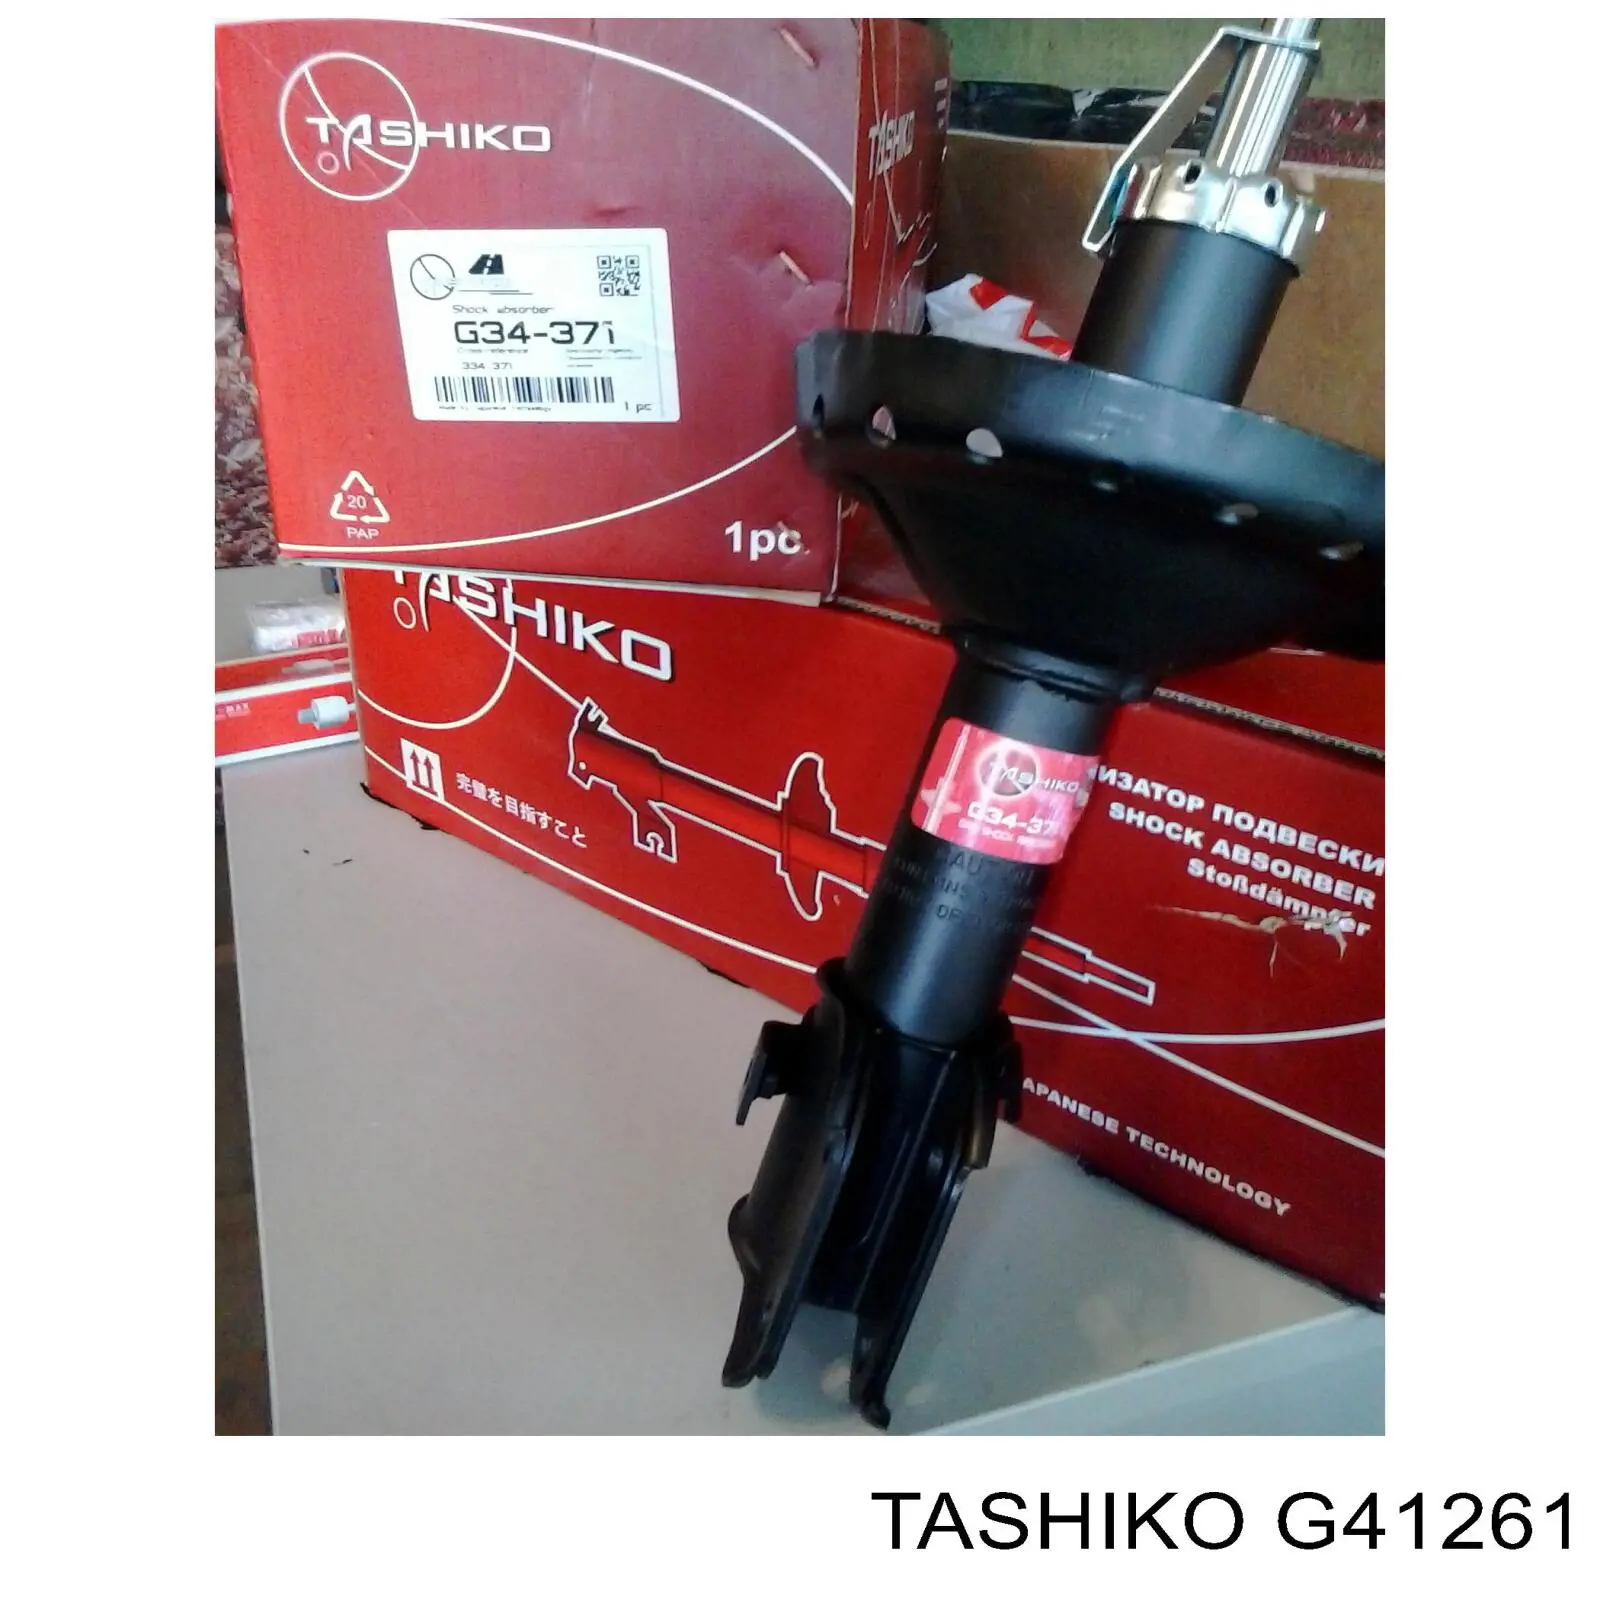 G41261 Tashiko амортизатор задний